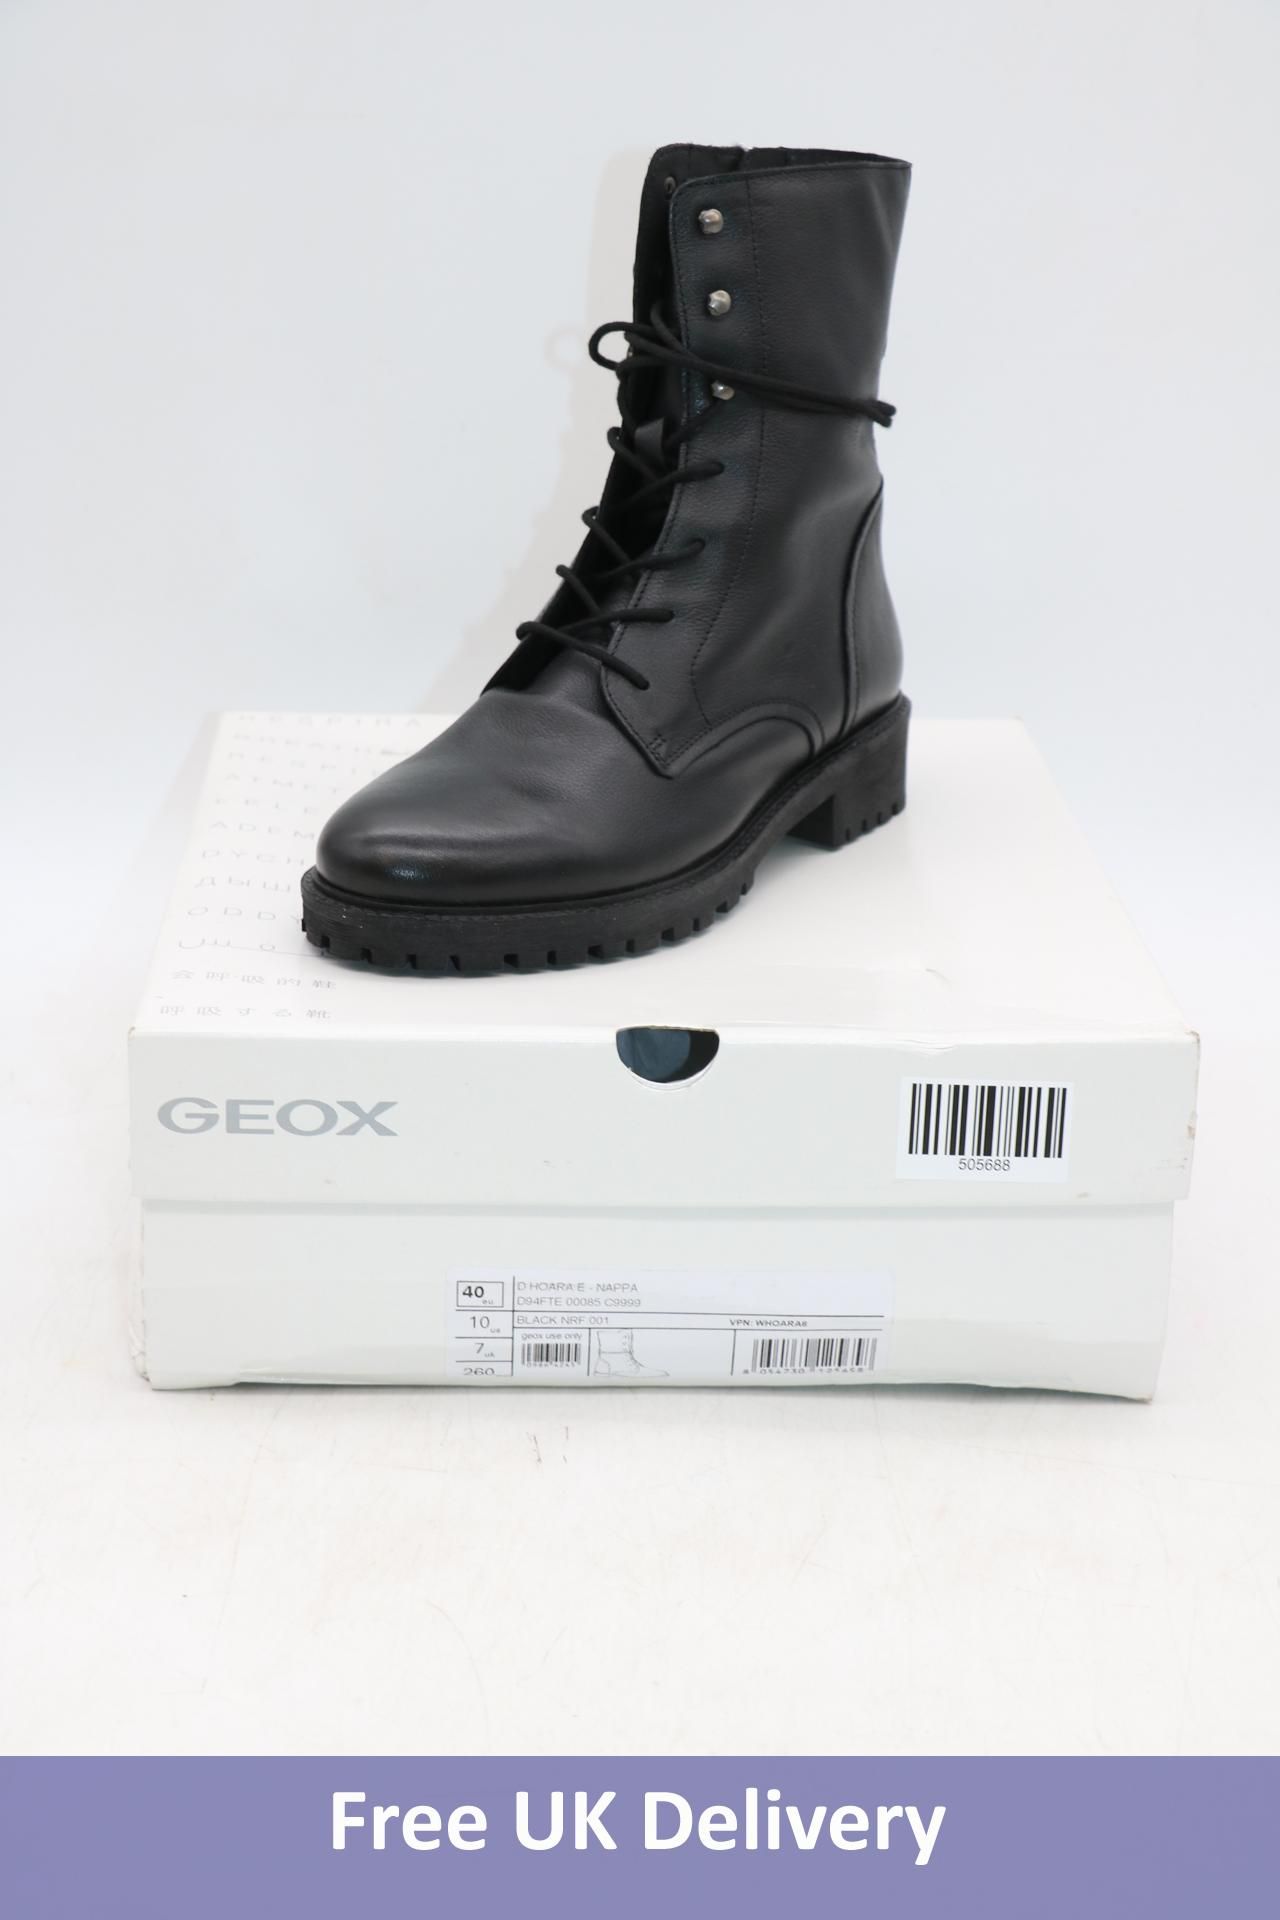 Geox Women's Hoara Combat Boots, Black, UK 7. Box damaged